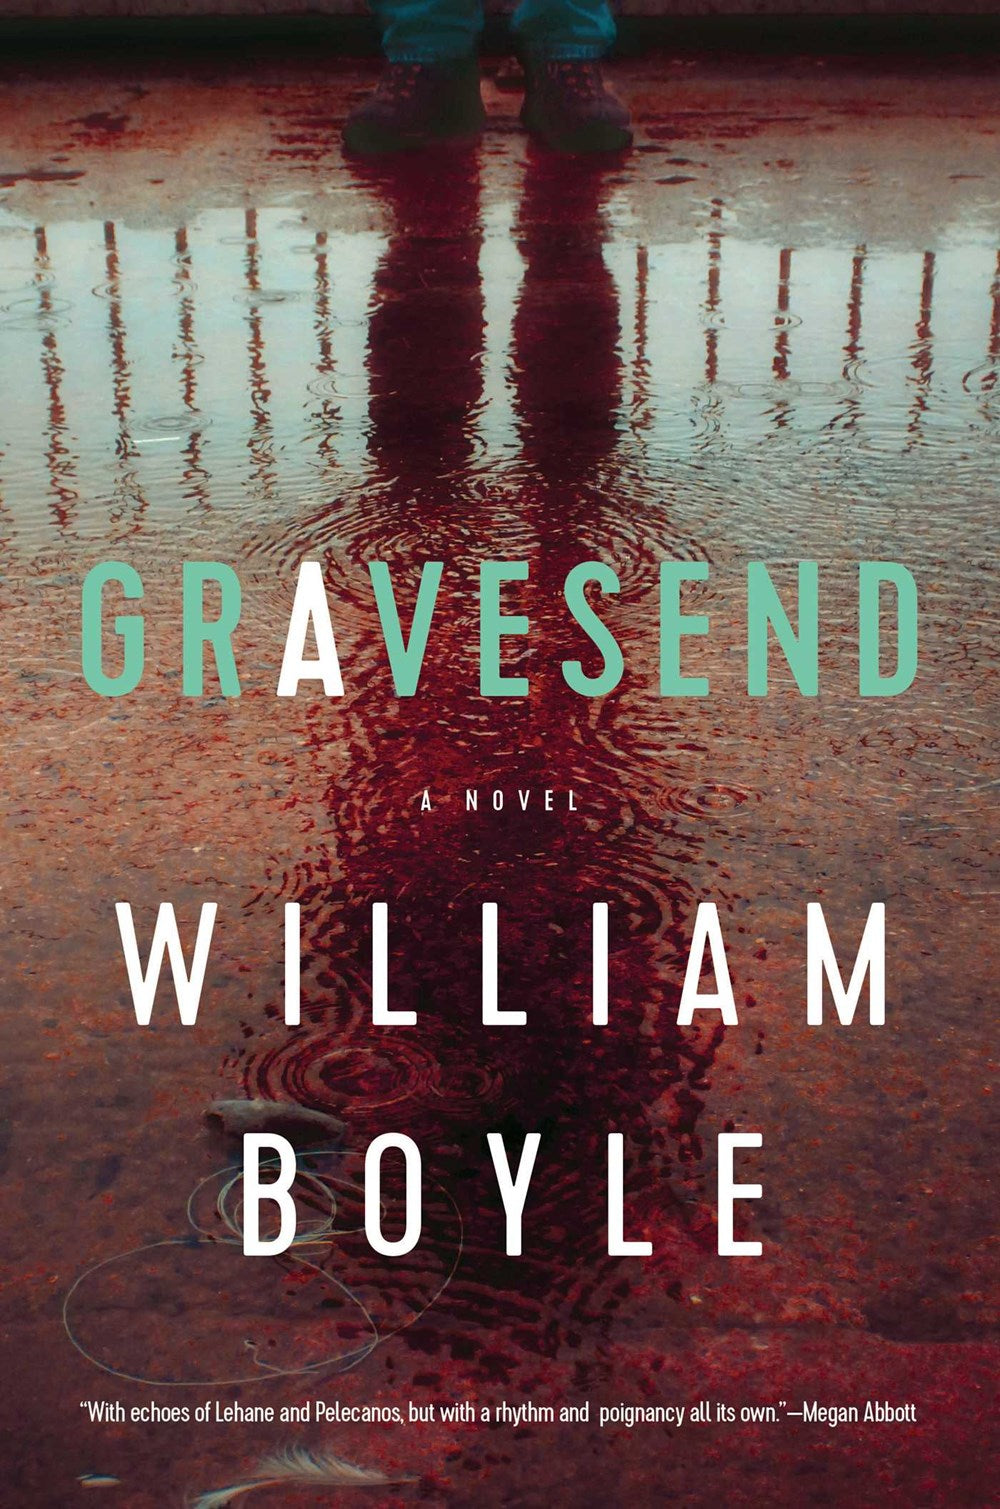 Gravesend: A Novel by William Boyle